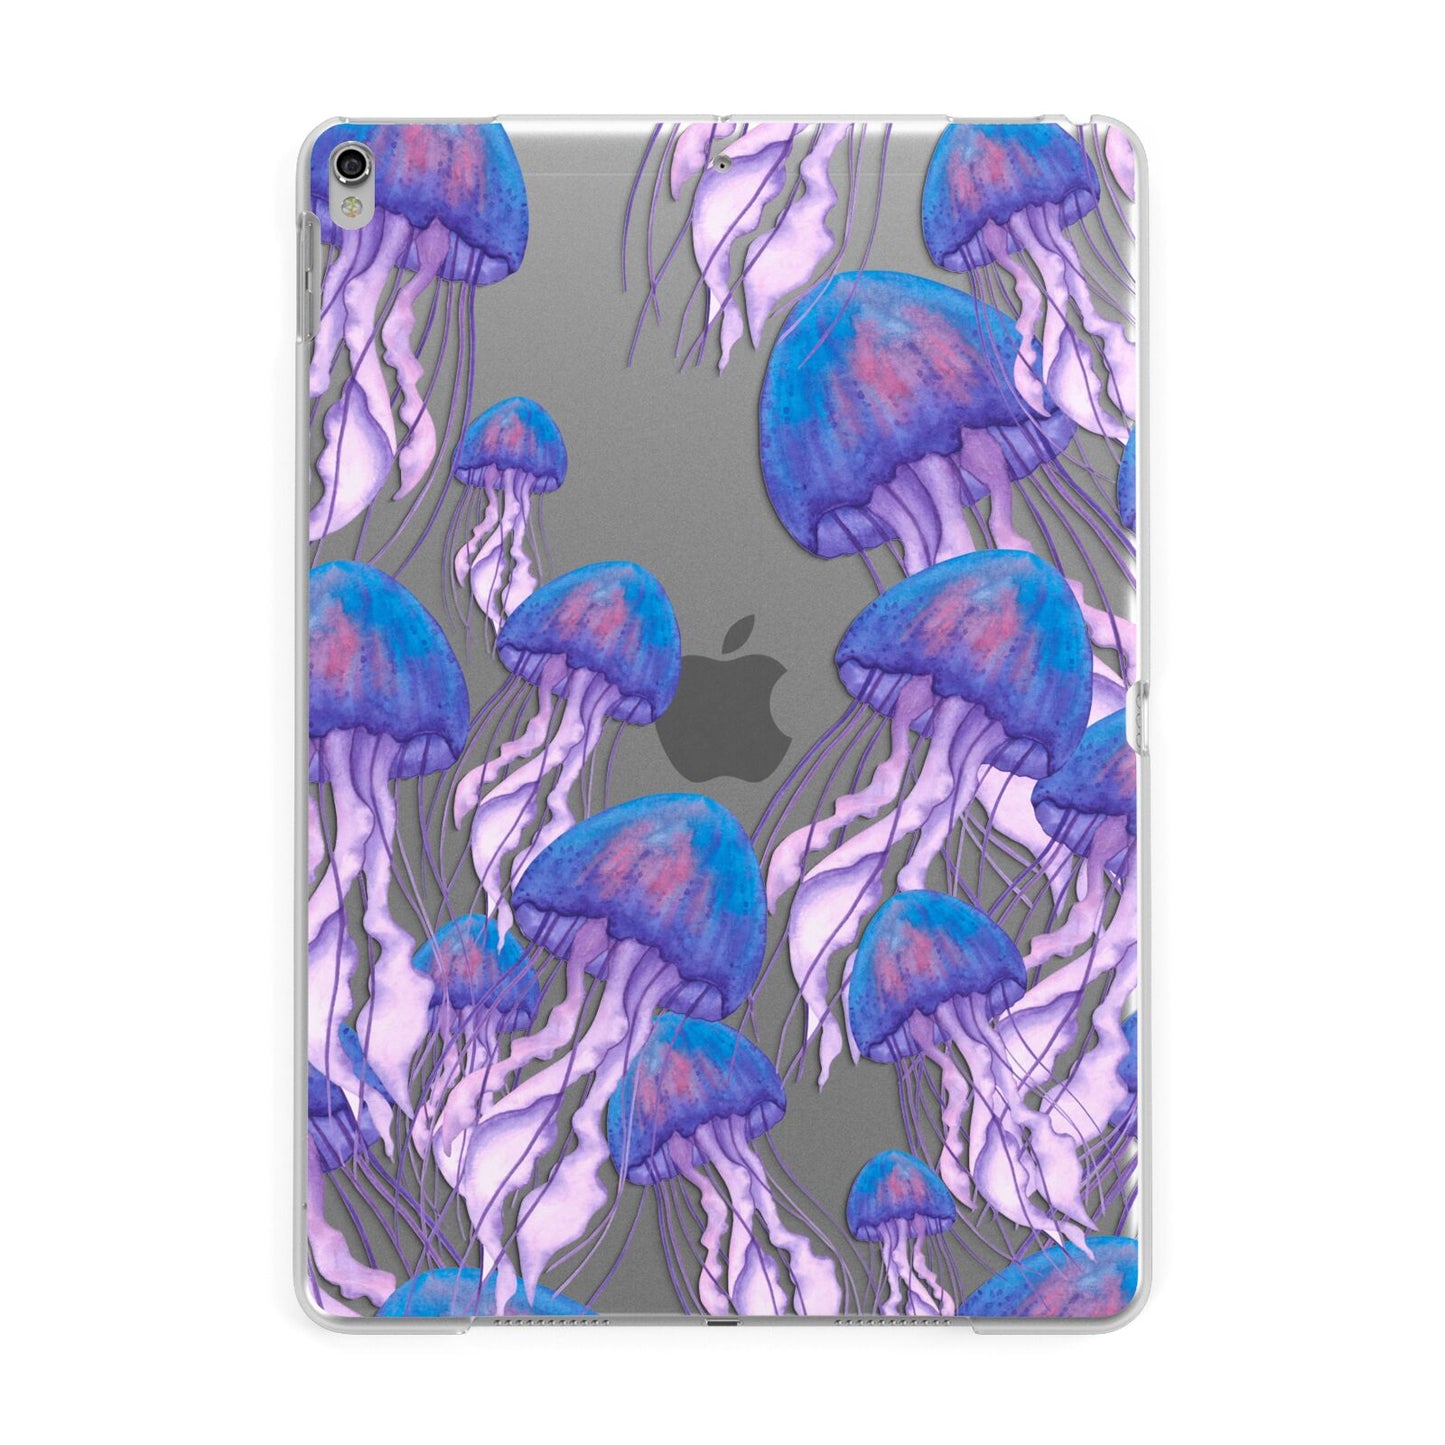 Jellyfish Apple iPad Silver Case